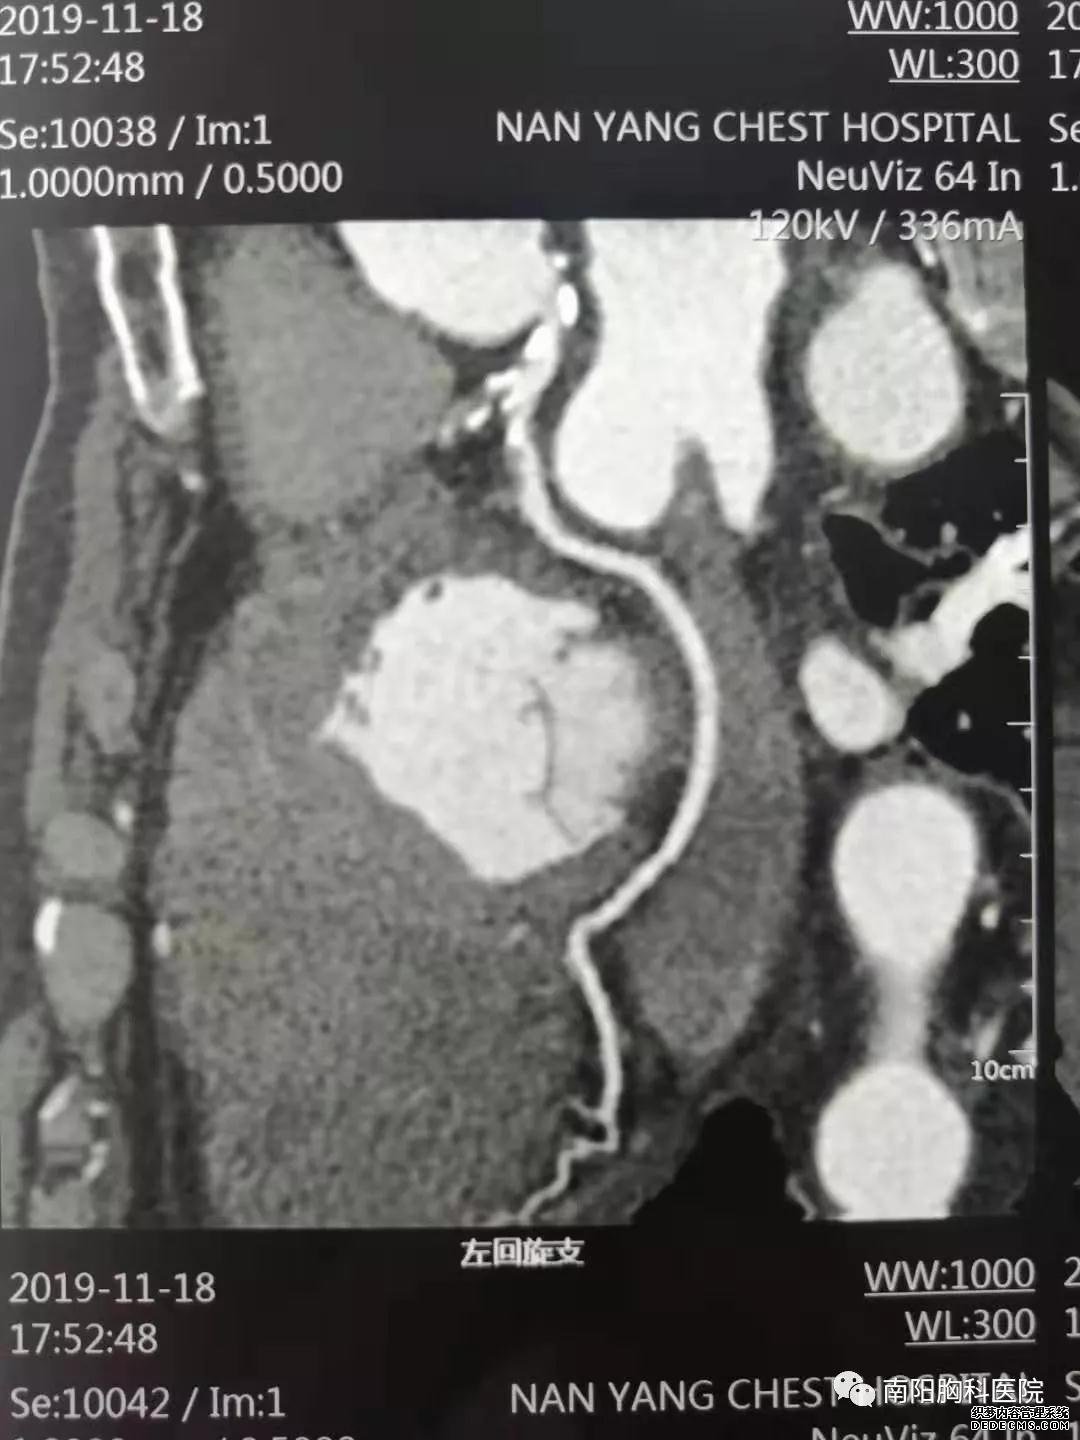 CT和MRI如何看正常及异常冠状动脉，高清图谱请收好！_冠状动脉_CT_MRI_医脉通